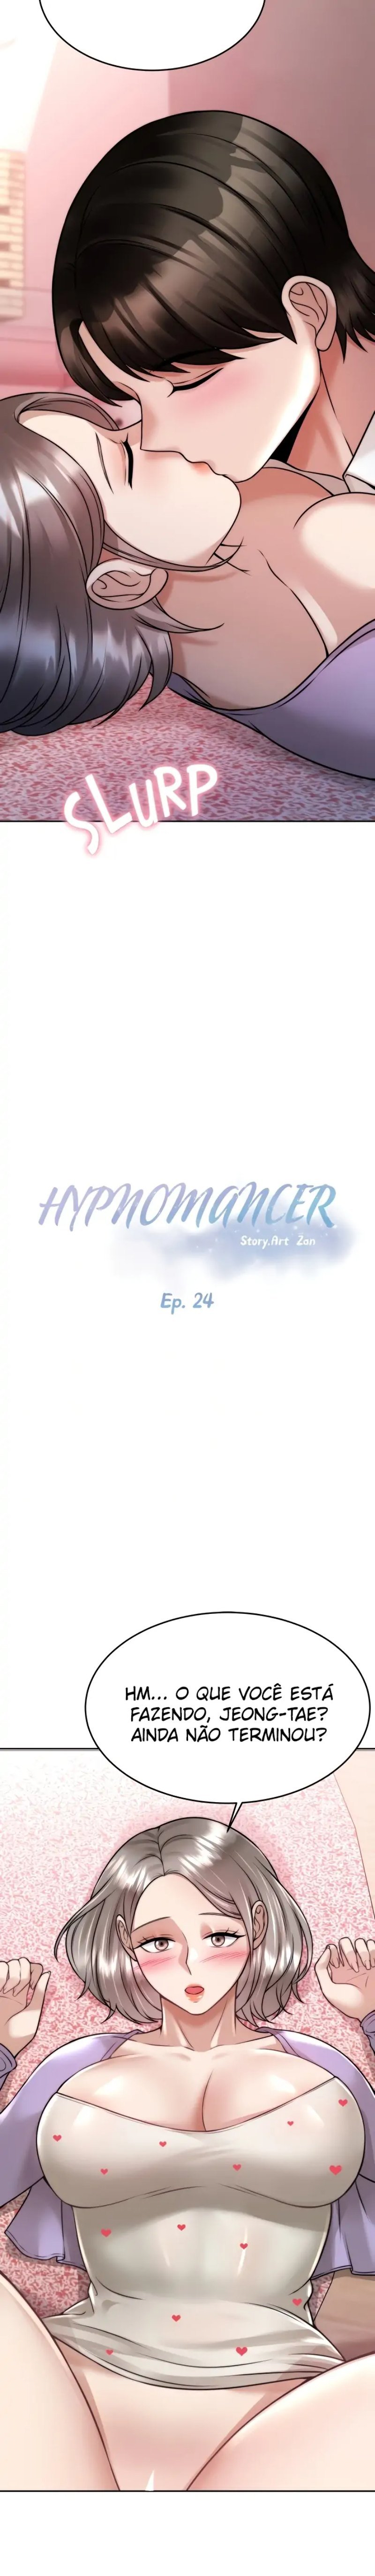 hypnomancer-raw-chap-24-2